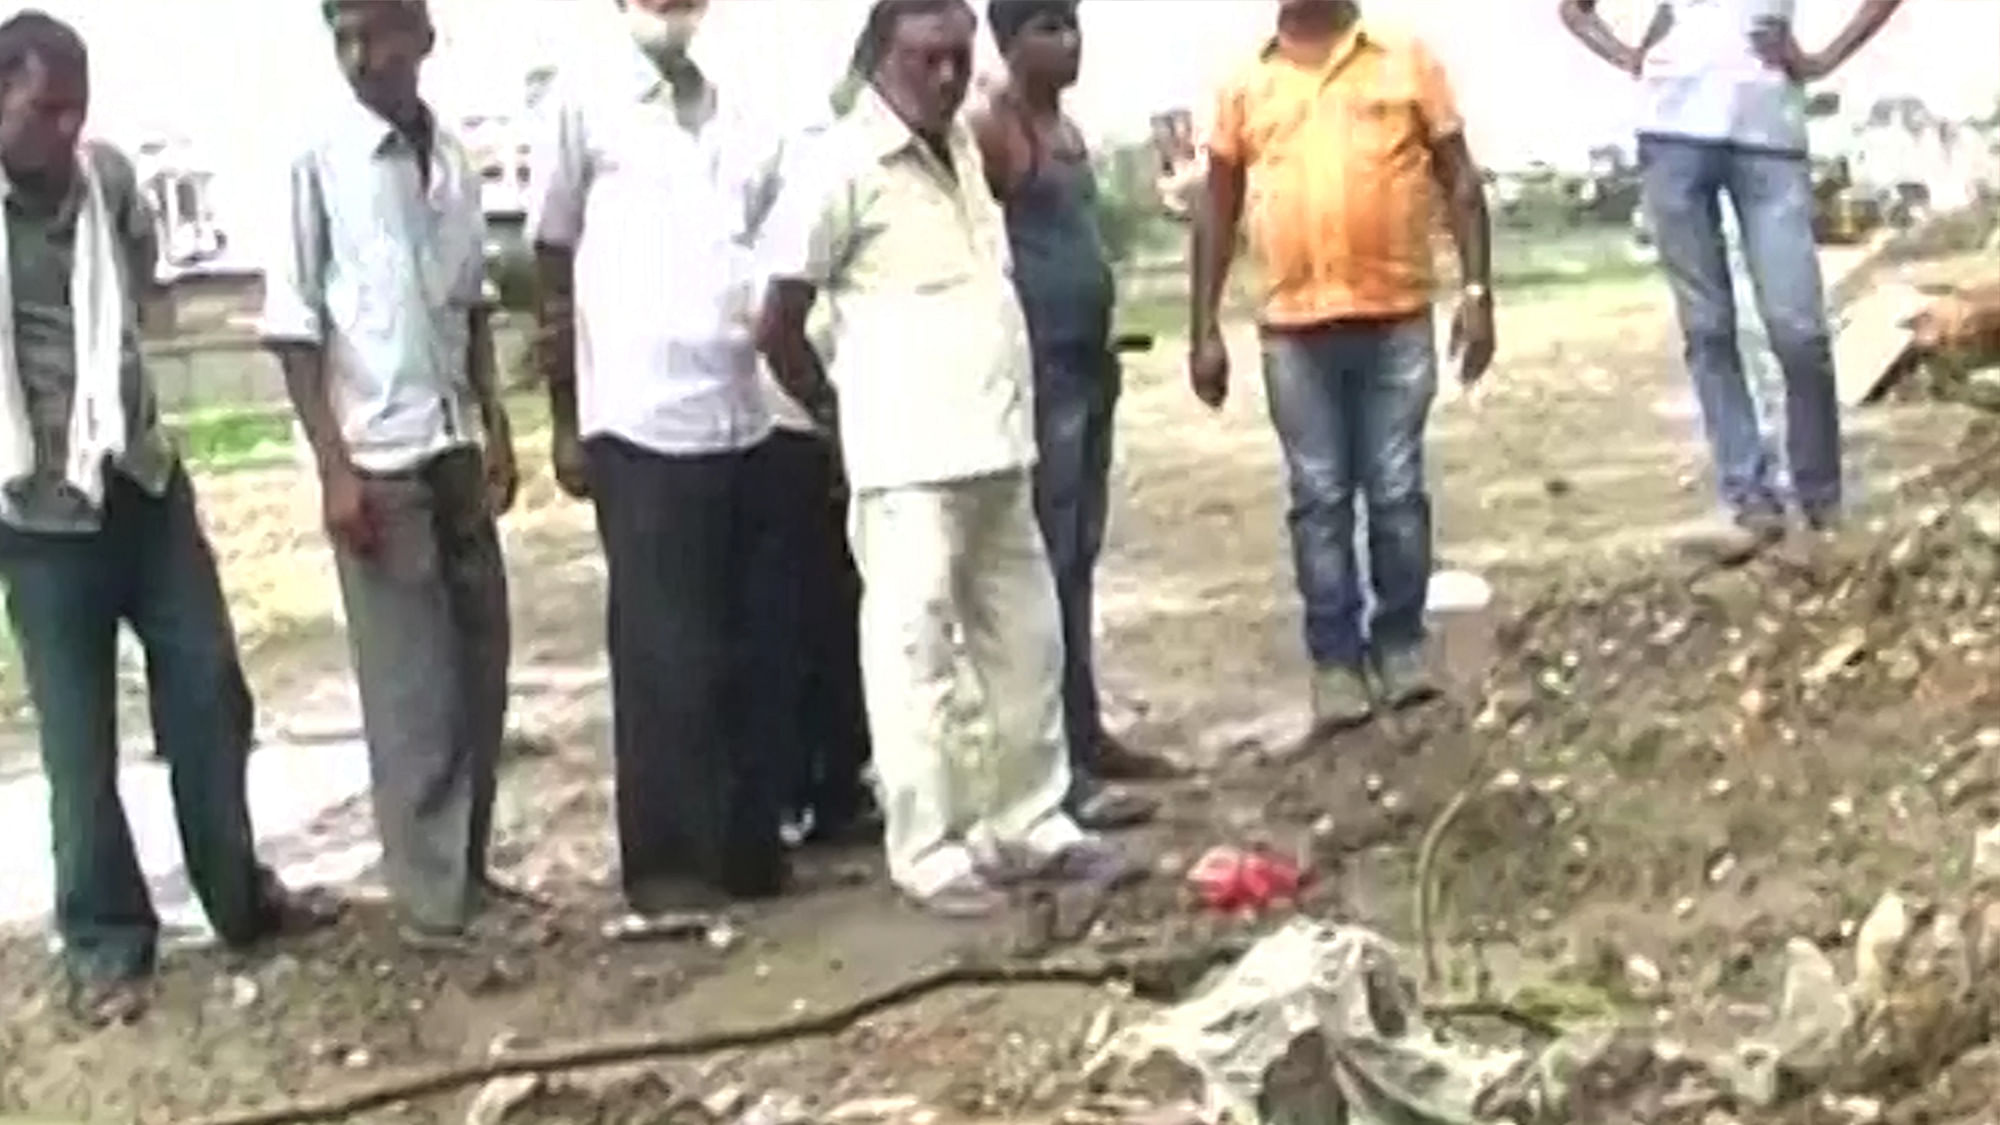 A newborn baby was found buried alive near a park in Sitapur, Uttar Pradesh. (Photo: ANI screengrab)